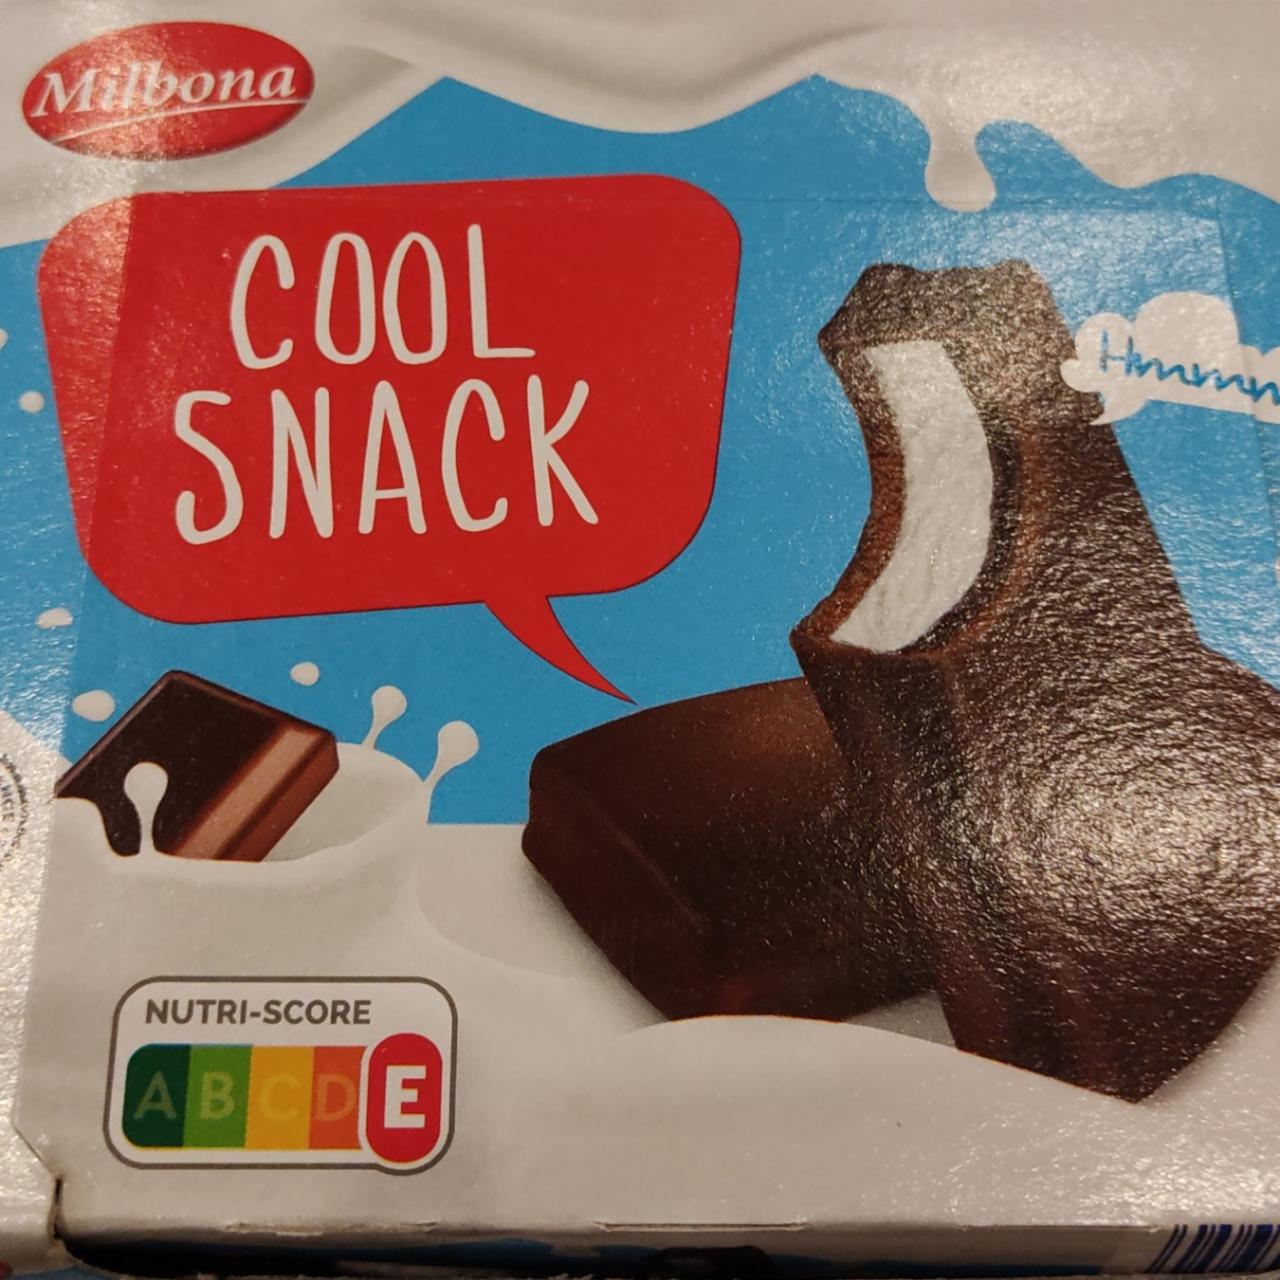 Képek - Cool snack Milbona